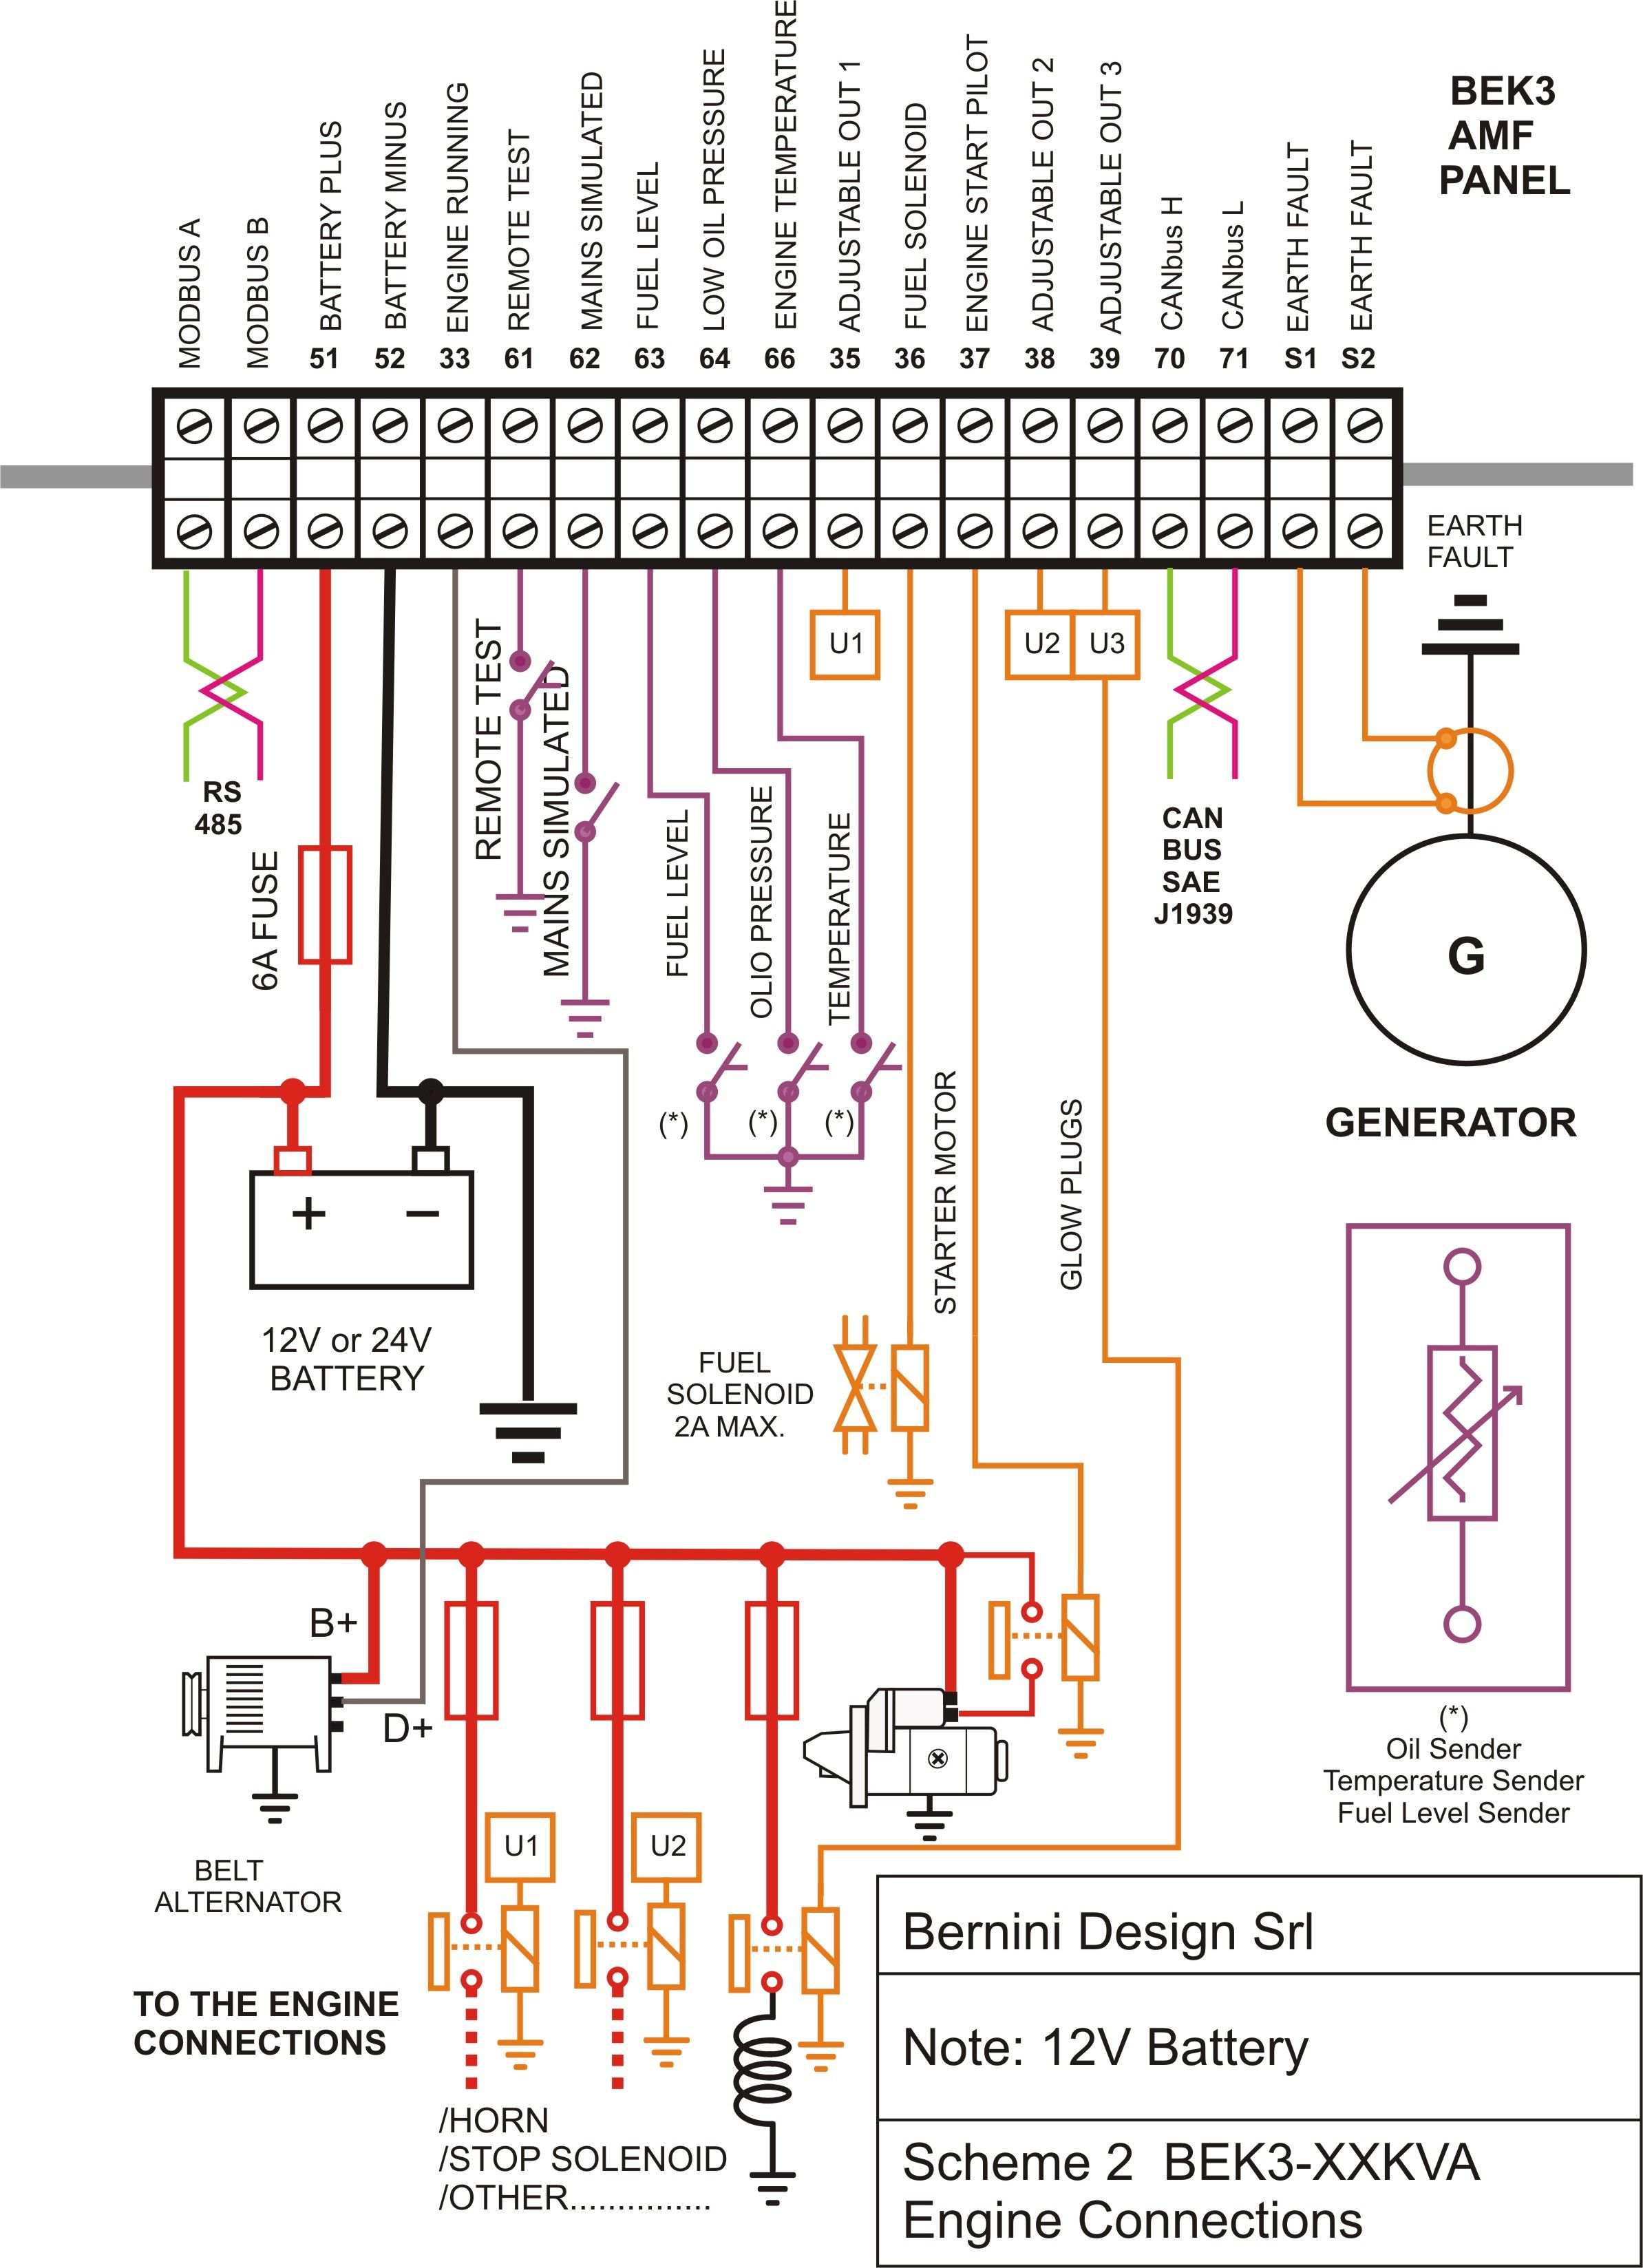 Diesel Generator Control Panel Wiring Diagram Engine Connections - Electrical Panel Wiring Diagram